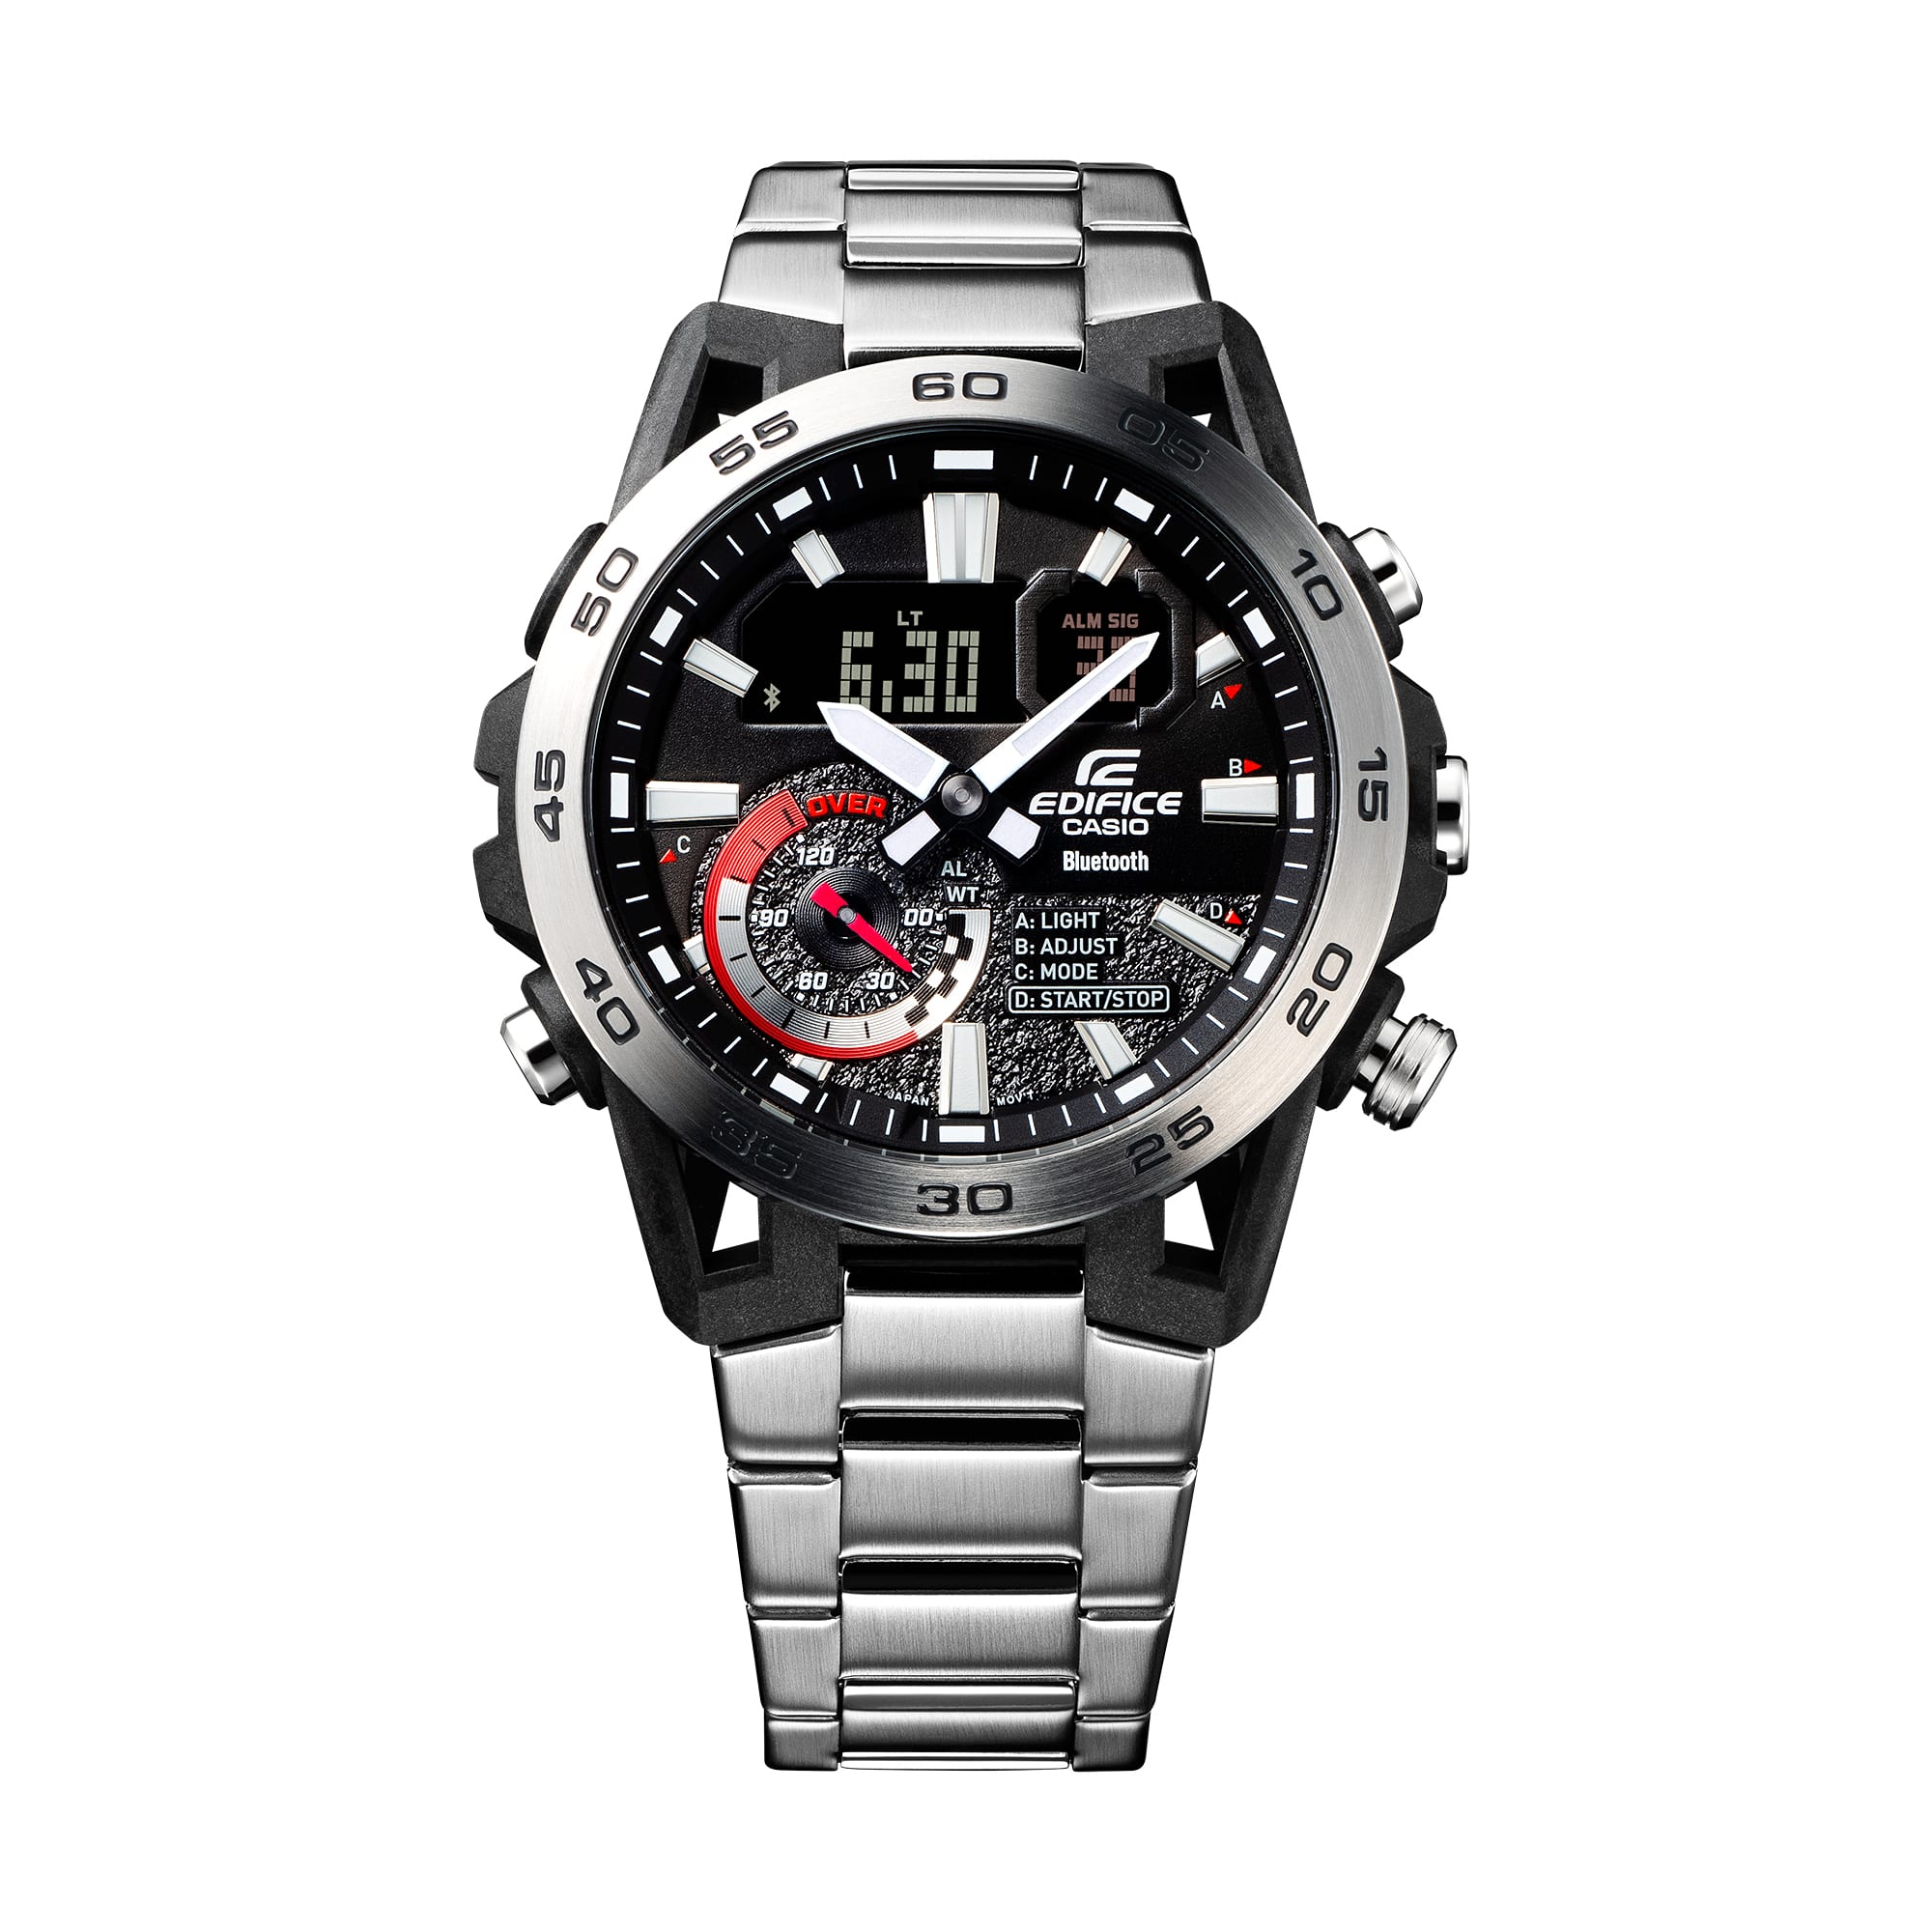 Men's Casio Edifice Solar Powered Chronograph Watch EQS940DB-1A